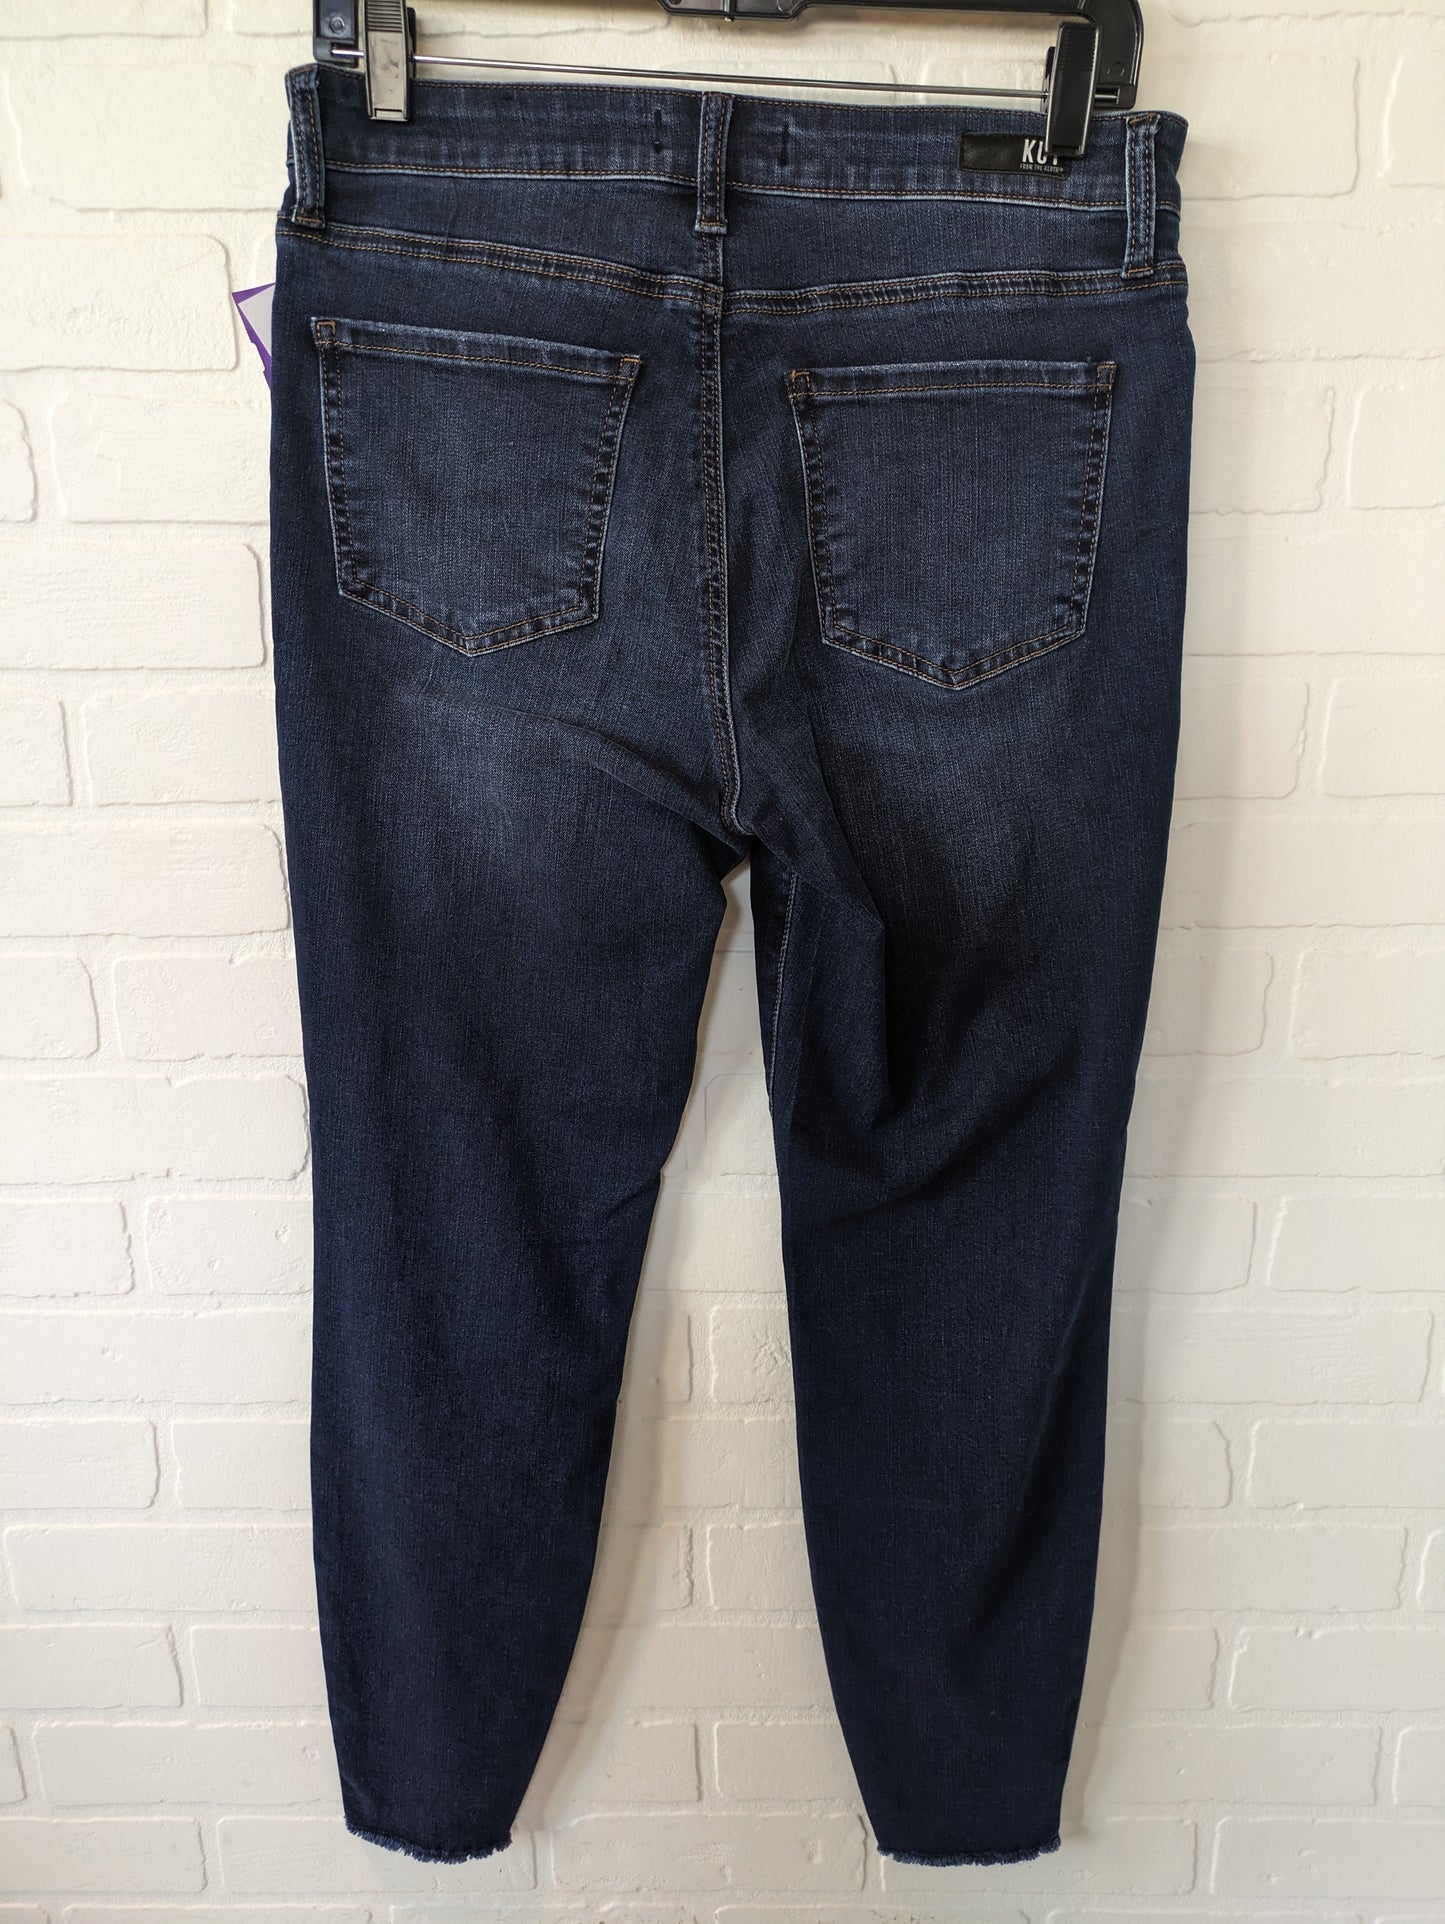 Blue Denim Jeans Skinny Kut, Size 8